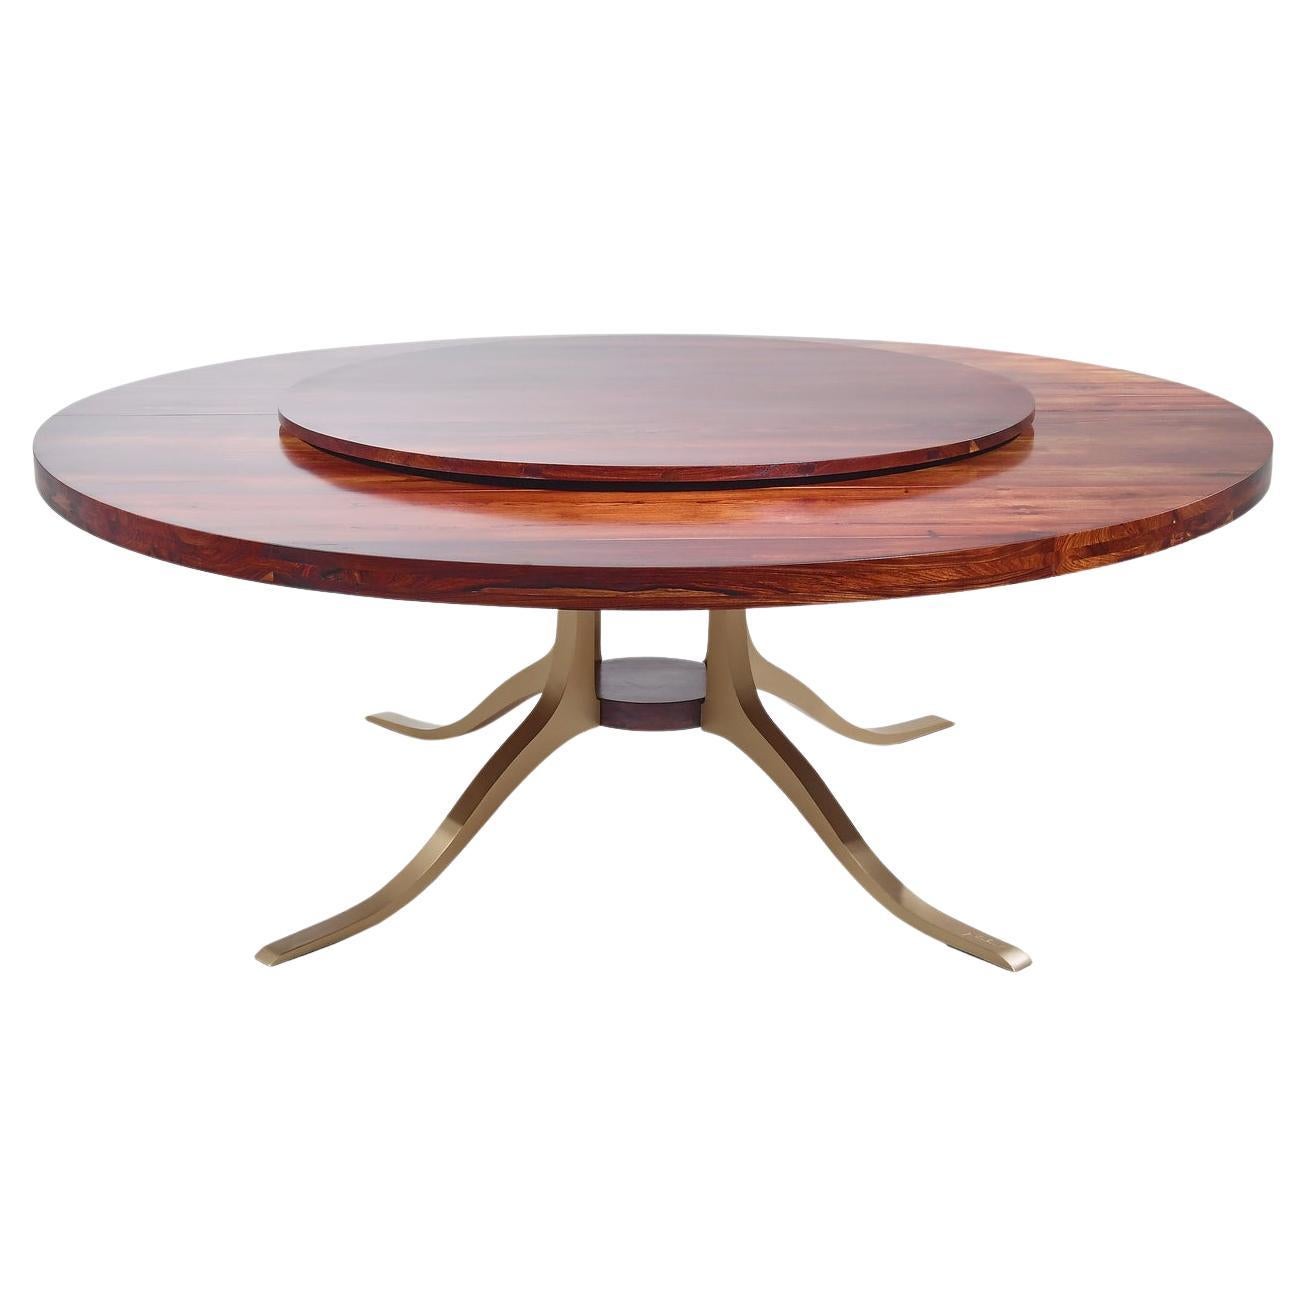 Bespoke Round Table, Reclaimed Hardwood, Brass Base by P. Tendercool, 'In-Stock'